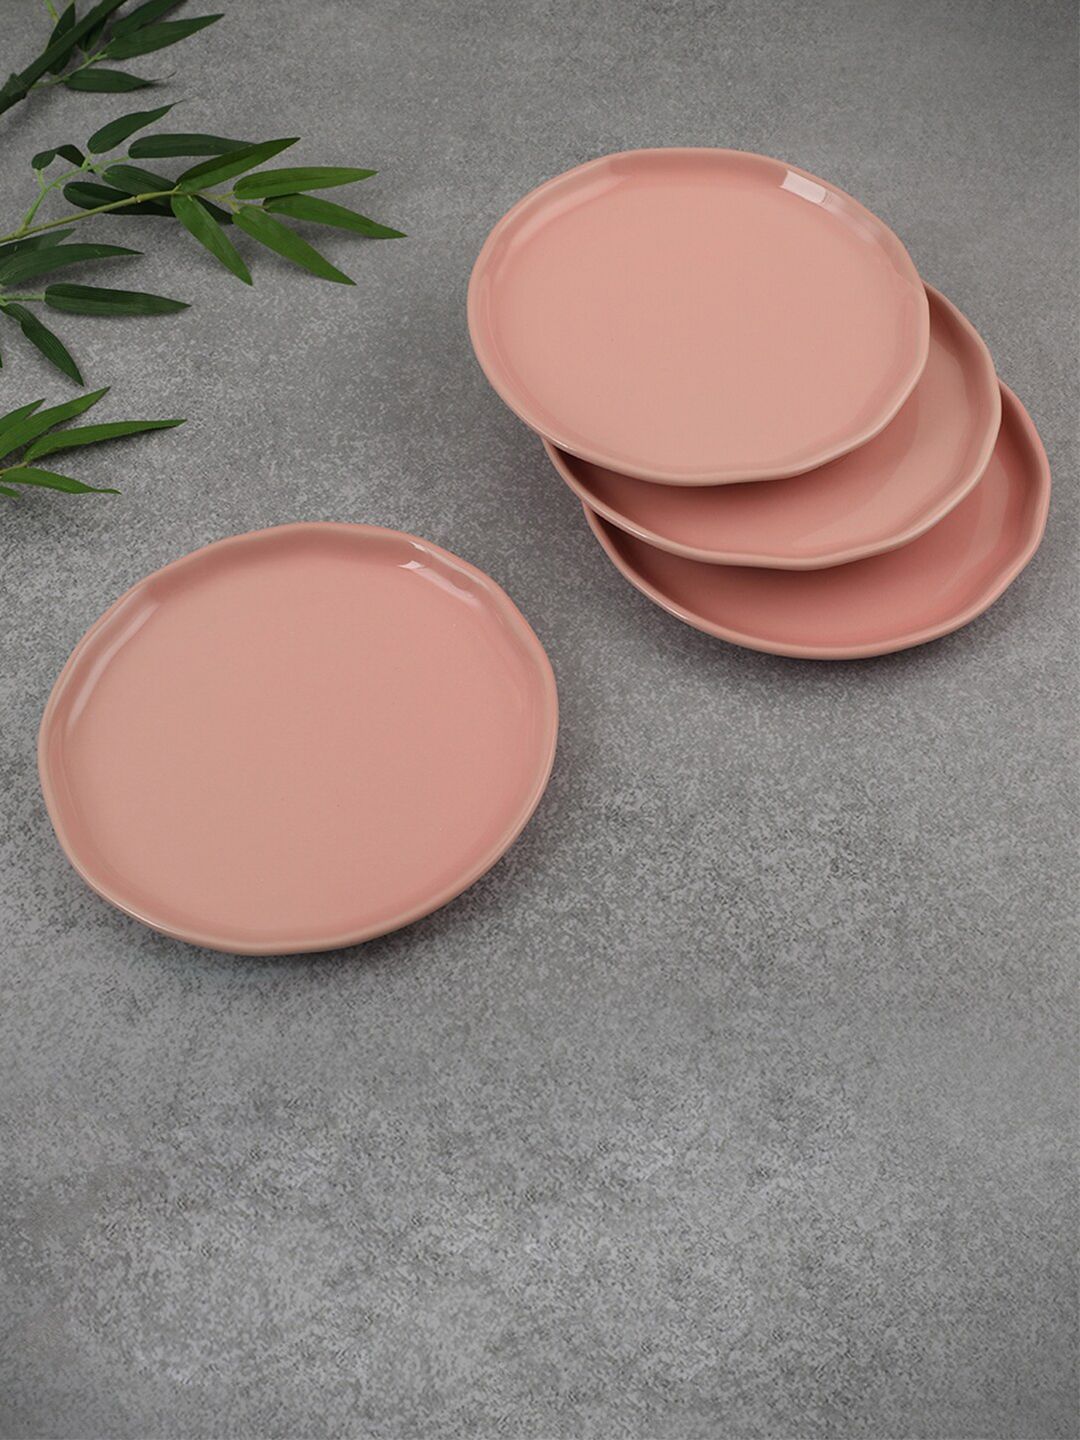 HomeTown Unisex Pink Dinnerware Price in India